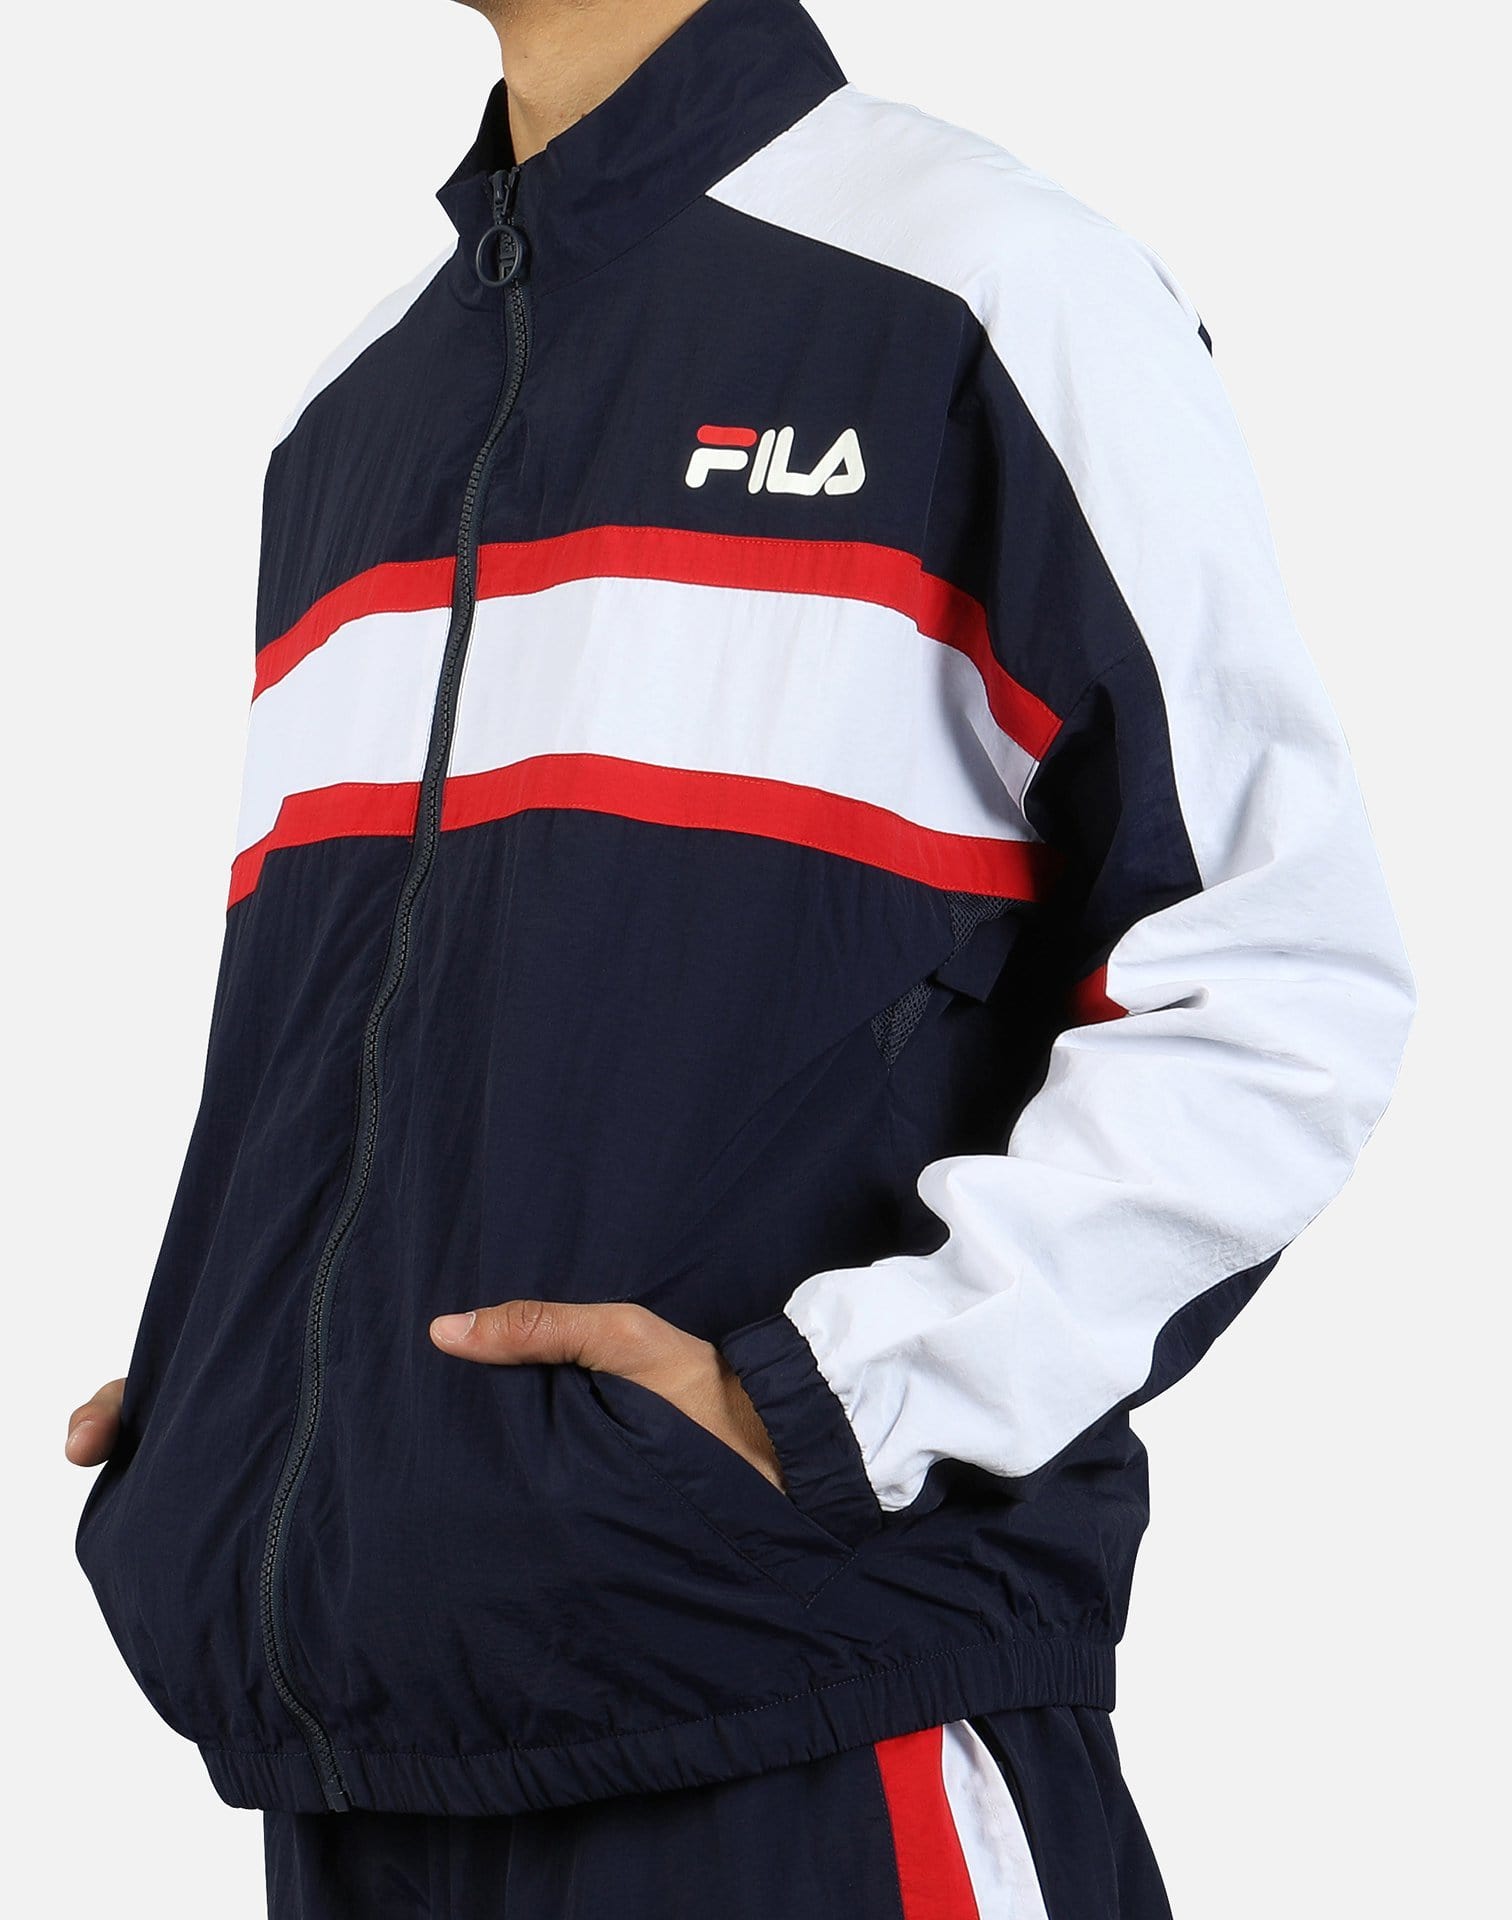 FILA Men's Carter Colorblock Woven Jacket